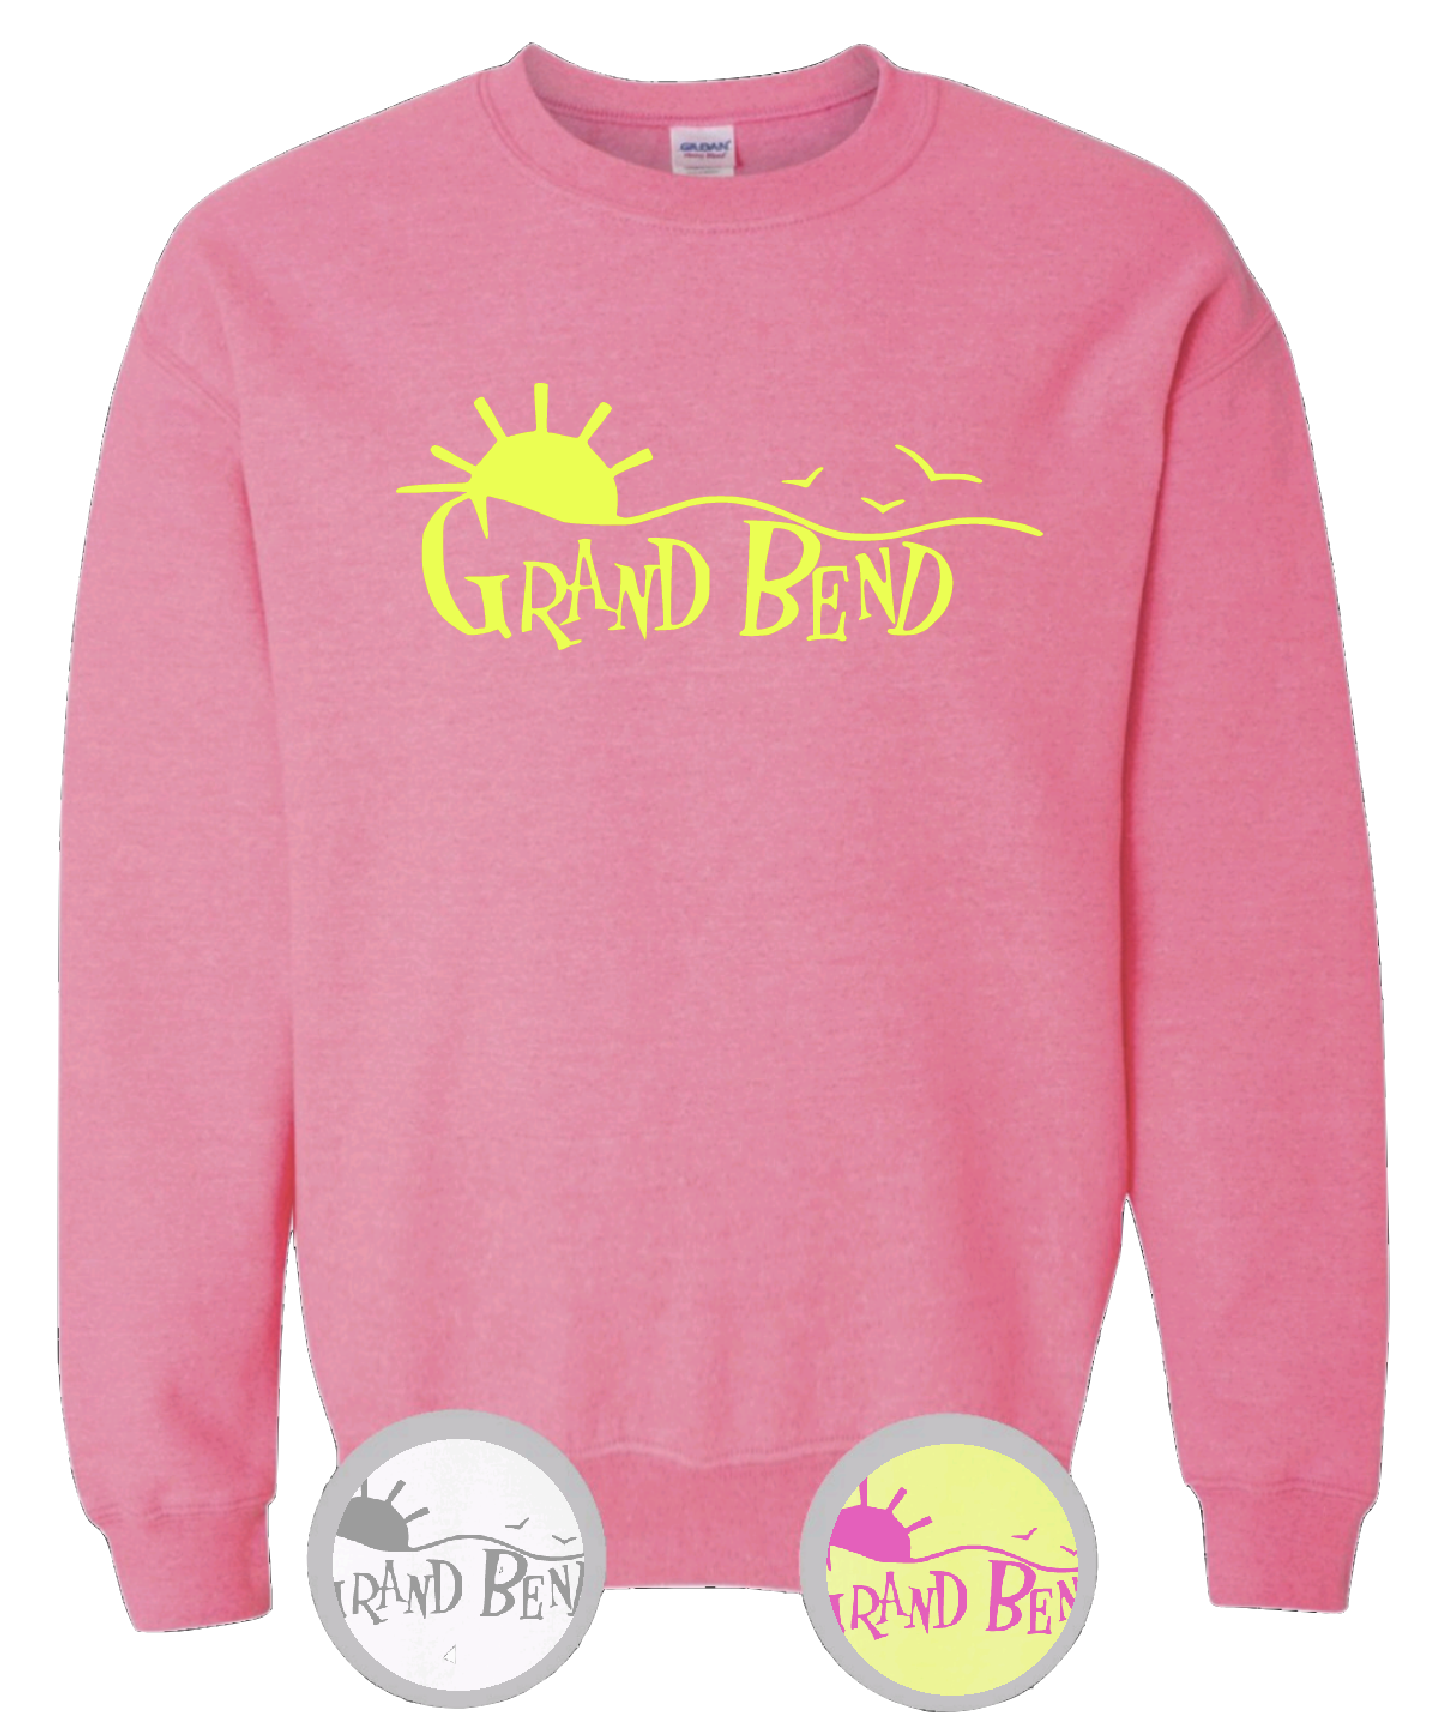 Ontario's West Coast - Grand Bend - Iconic Town Logo Crewneck Sweater